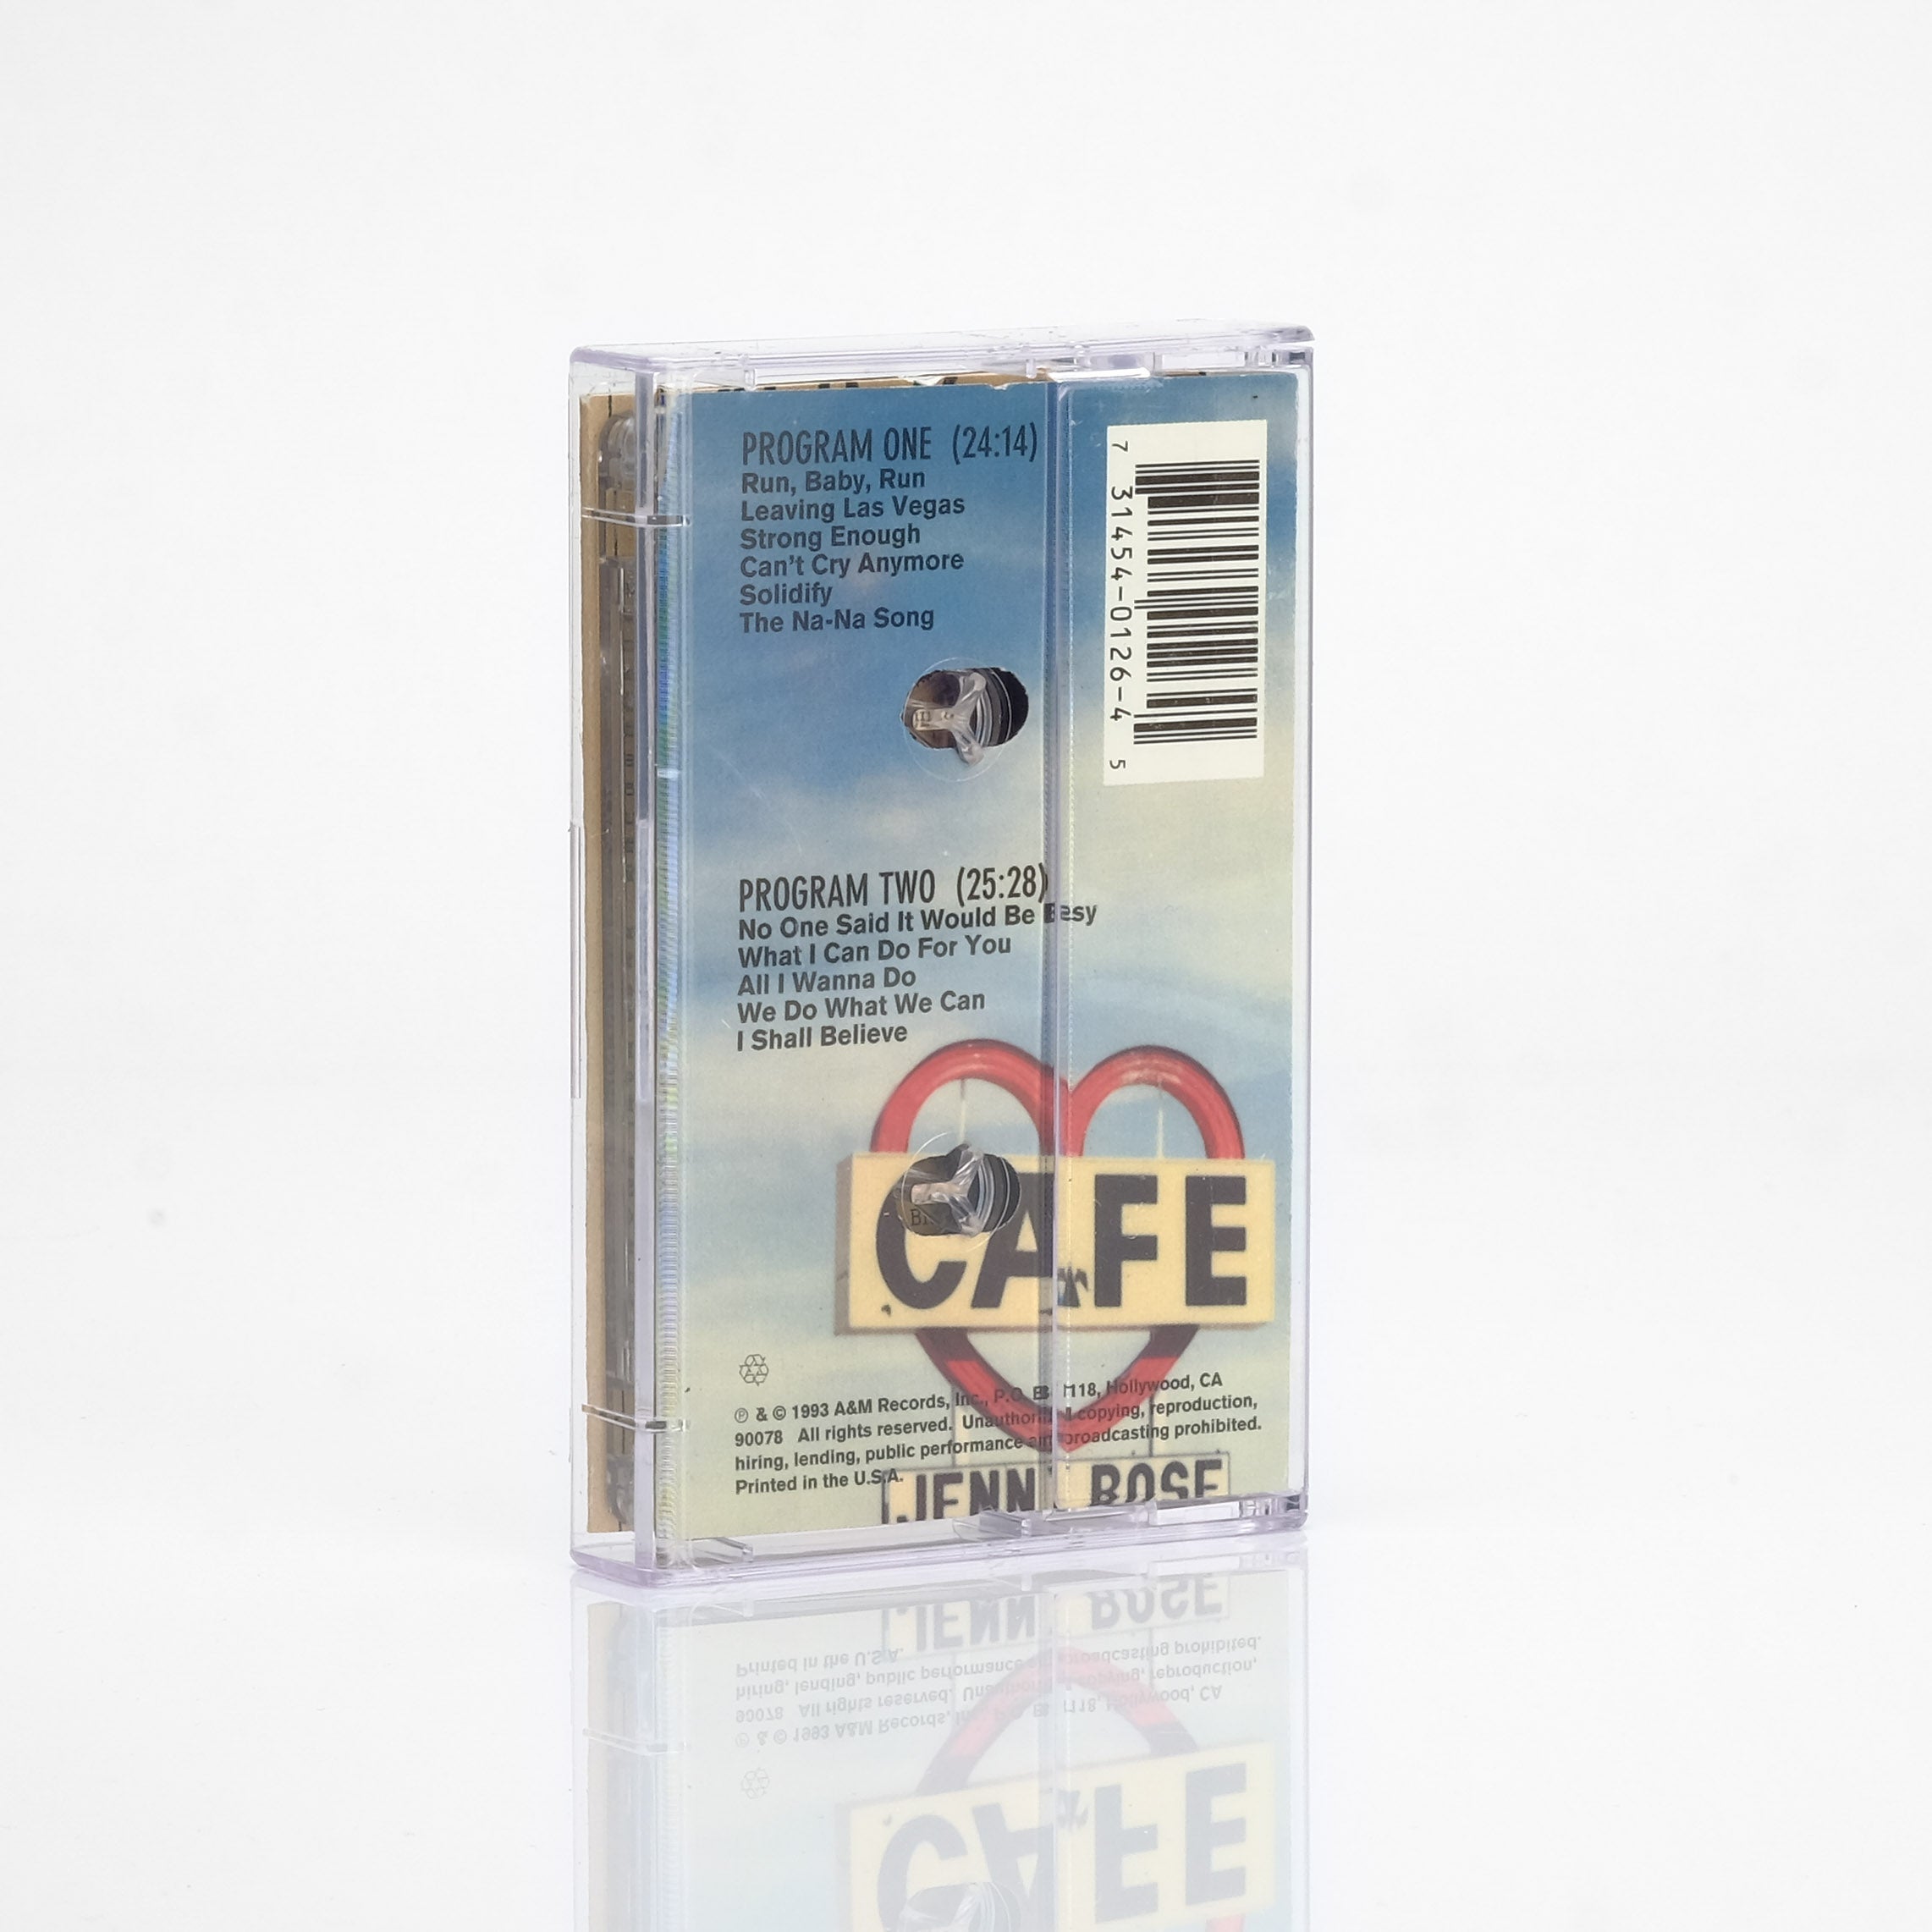 Sheryl Crow - Tuesday Night Music Club Cassette Tape